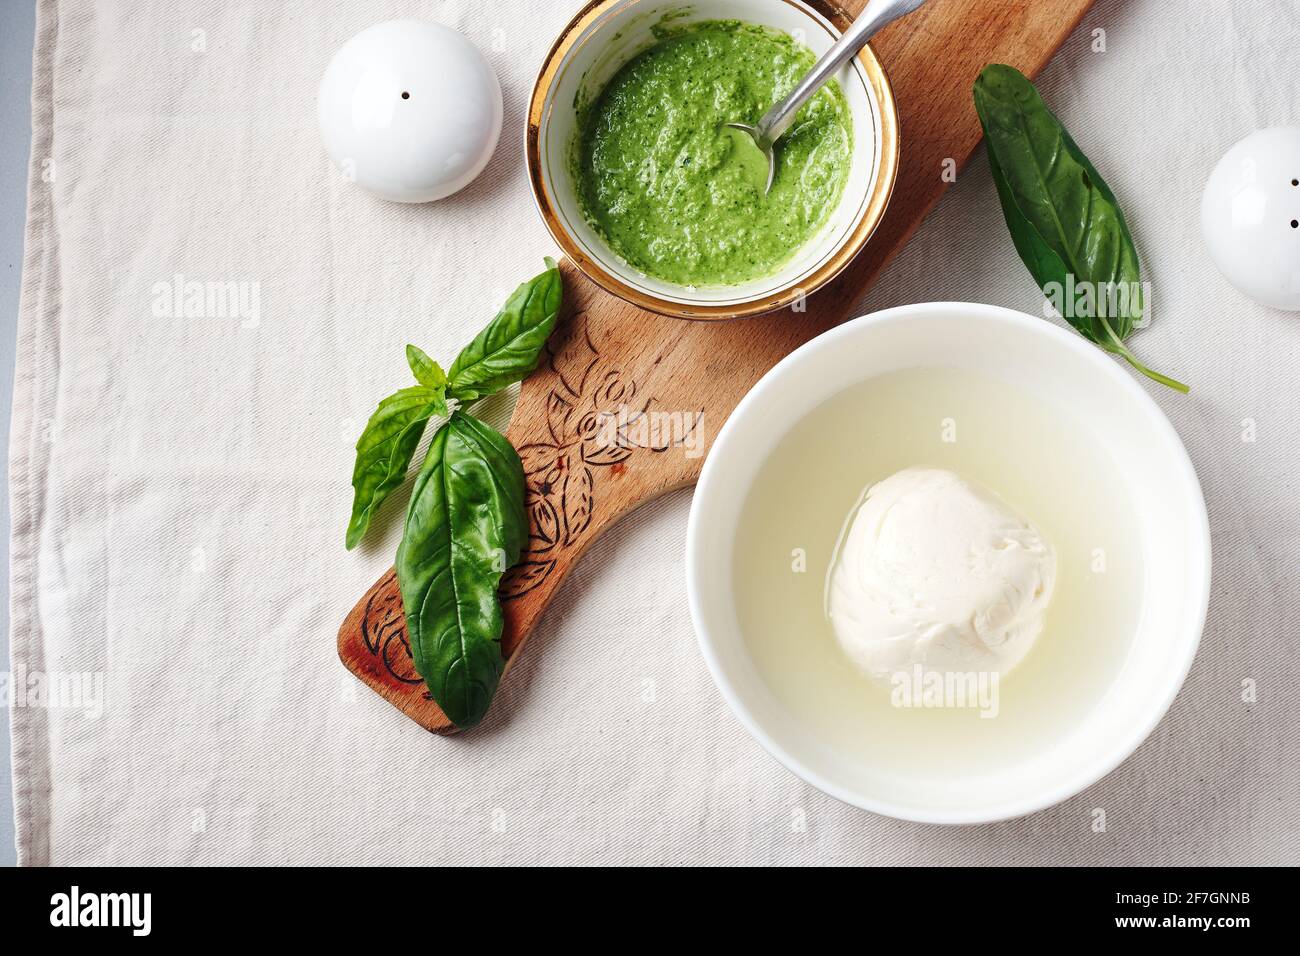 Mozzarella cheese ball in a bowl, pesto sauce and fresh basil leaves. Stock Photo